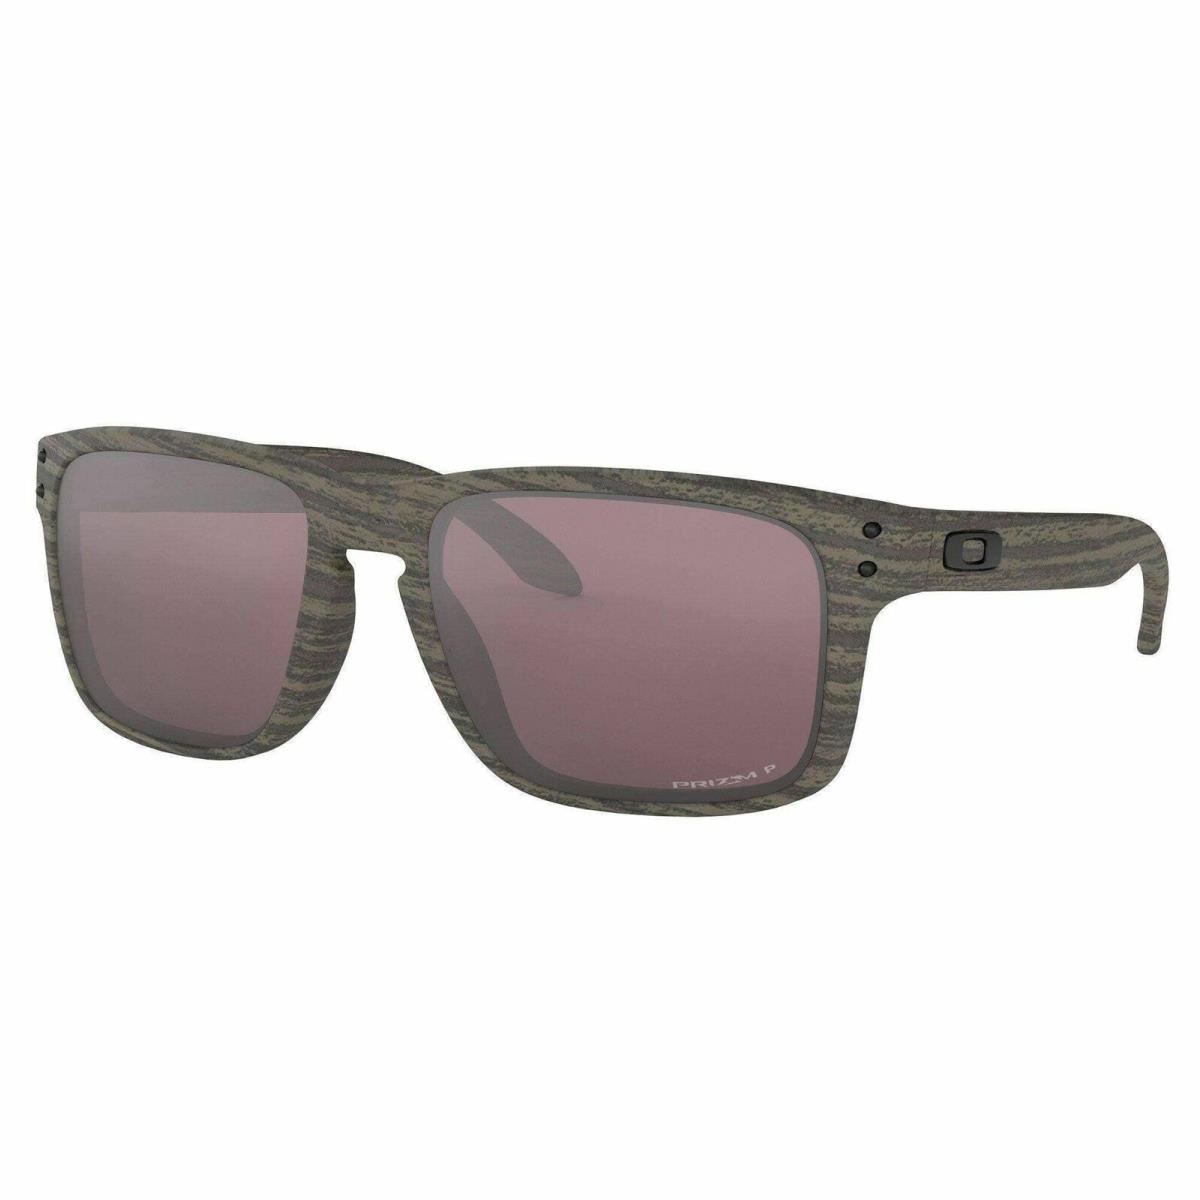 Oakley Holbrook Woodgrain Collection Sunglasses OO9102-B755 - Gray Frame, Gray Lens